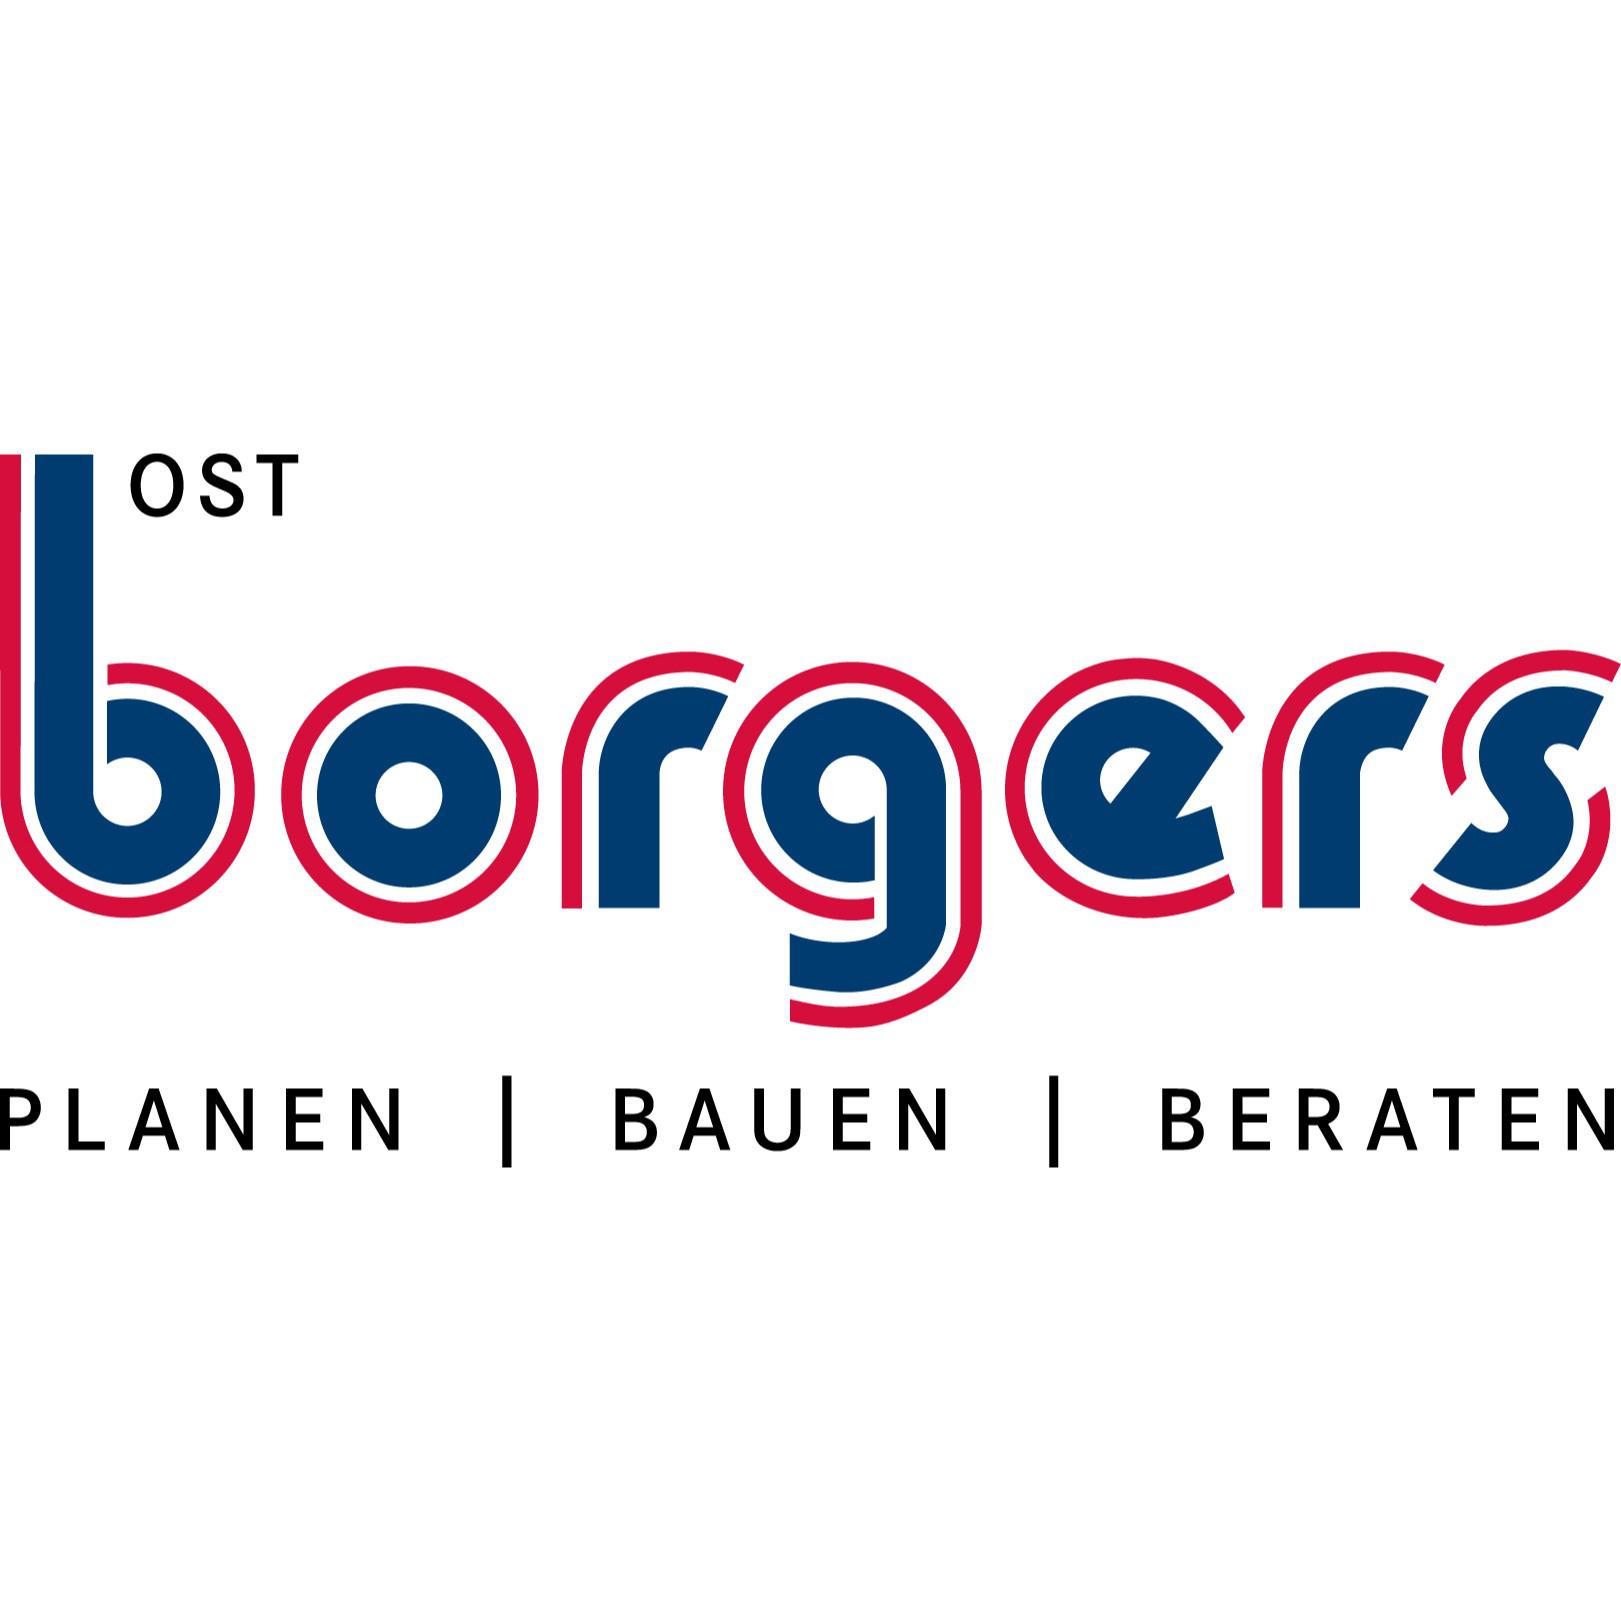 Logo Borgers Ost GmbH